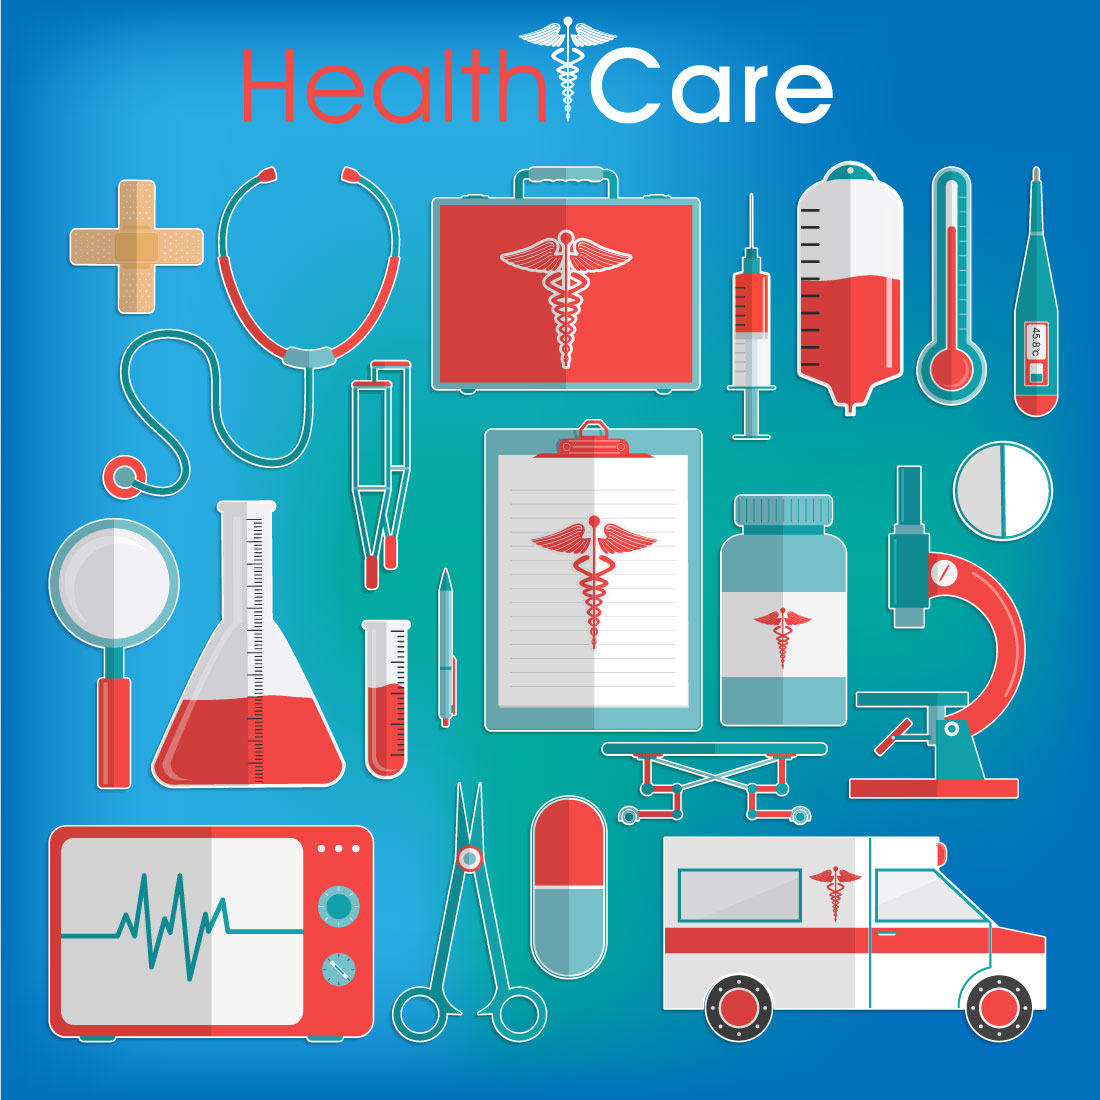 Medicine Design Elements – Medical Icon Set – Medical Design Elements Vector Stock Photo cover image.